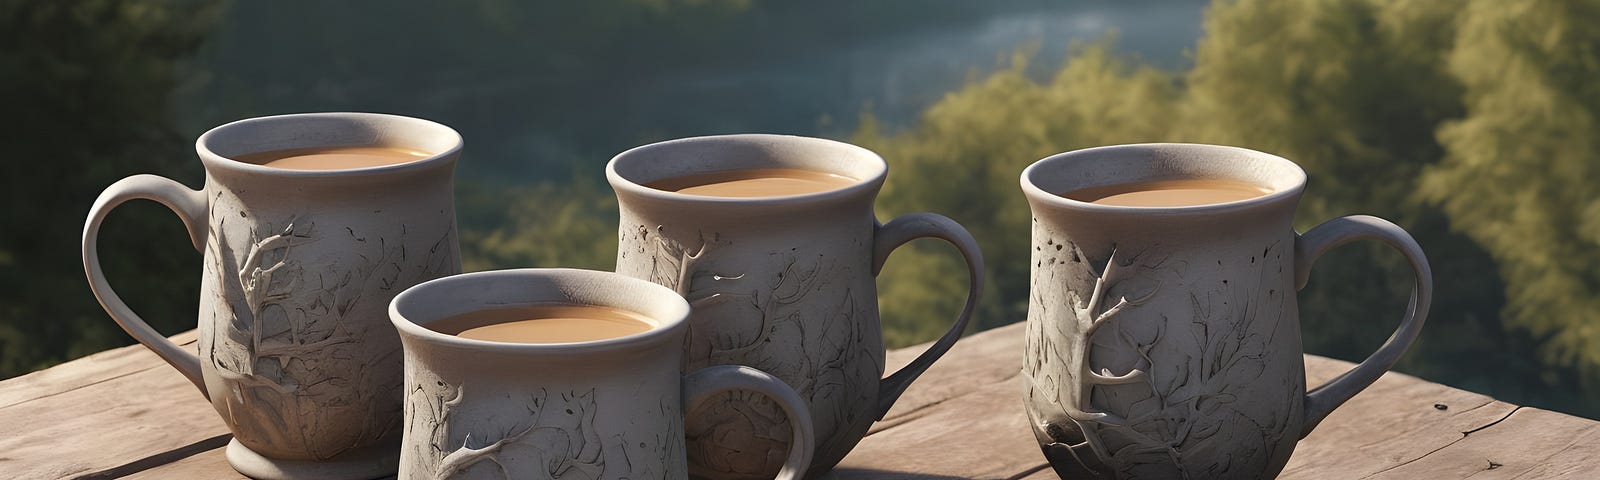 Four mugs of tea on an outside table